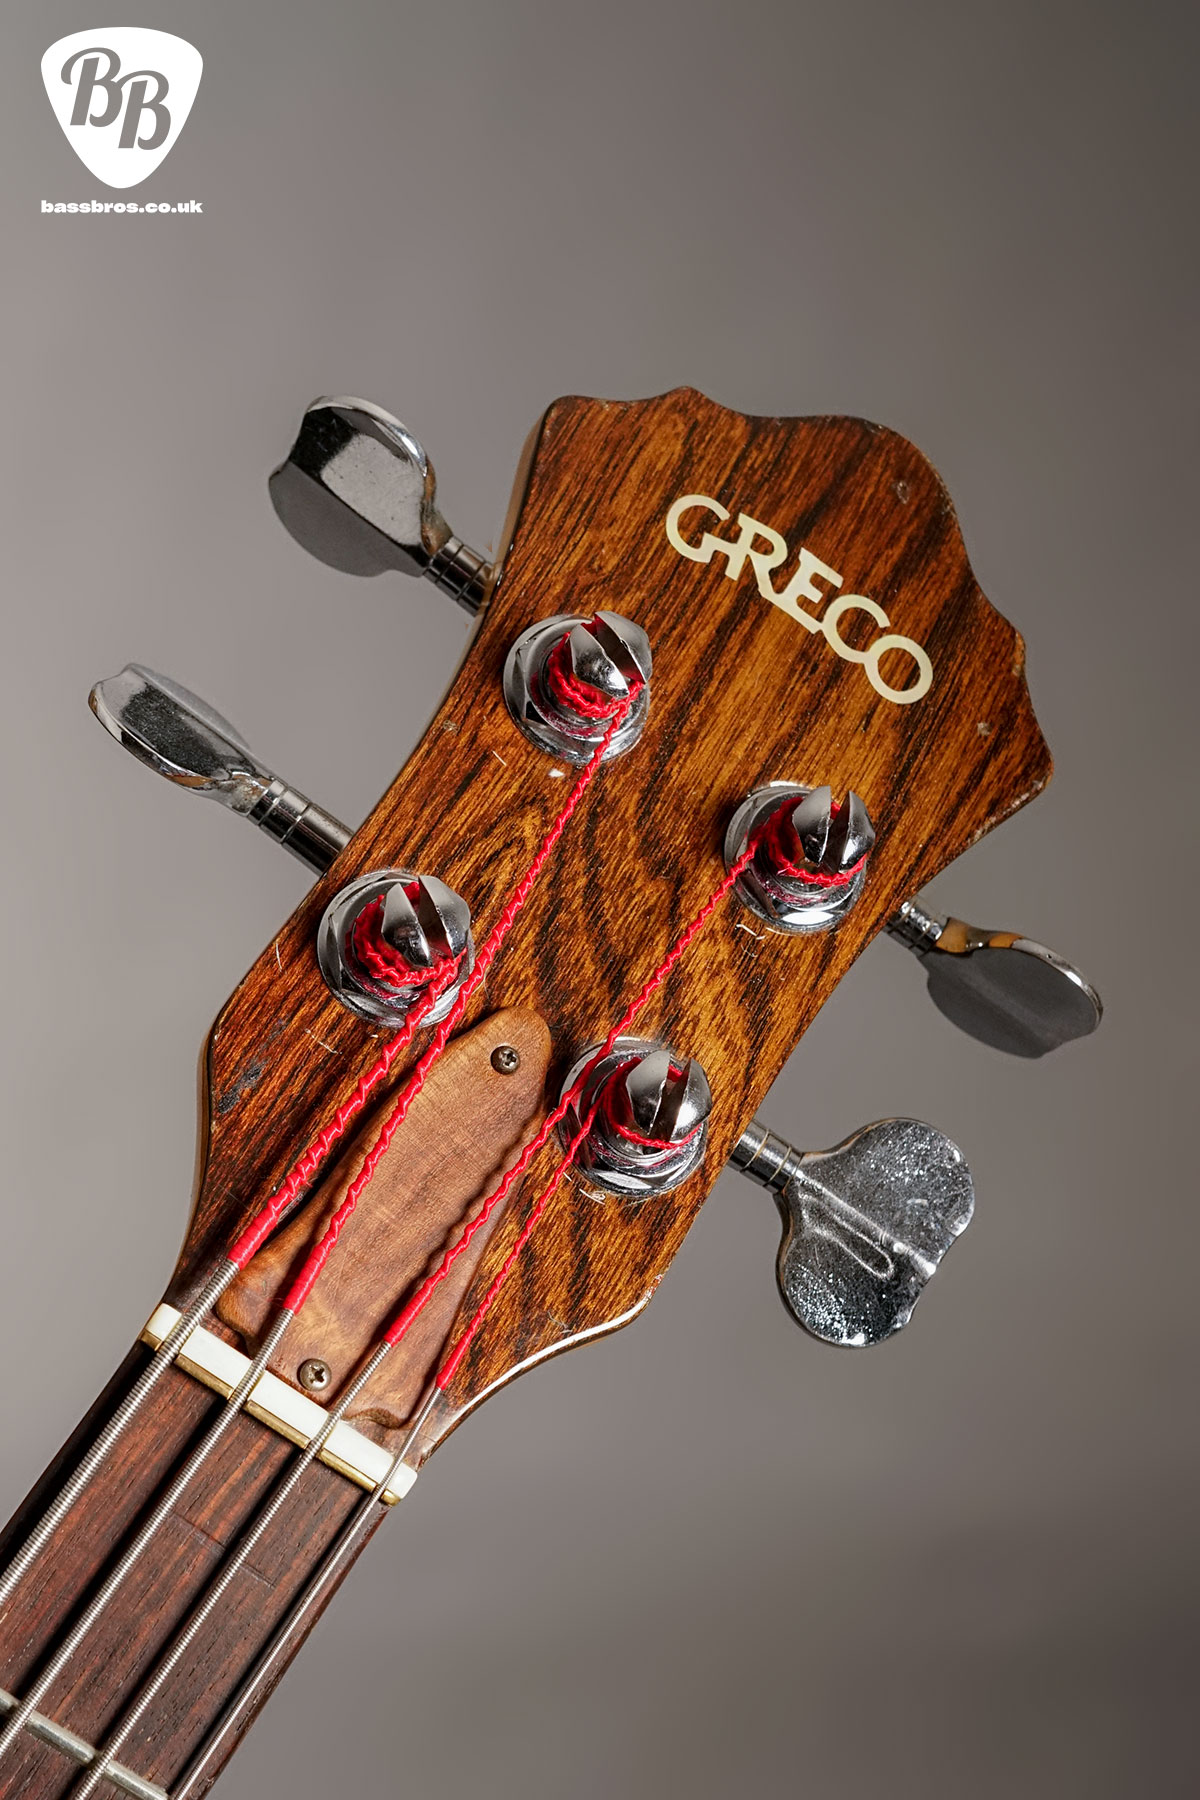 Greco GOB-700 | BassBros